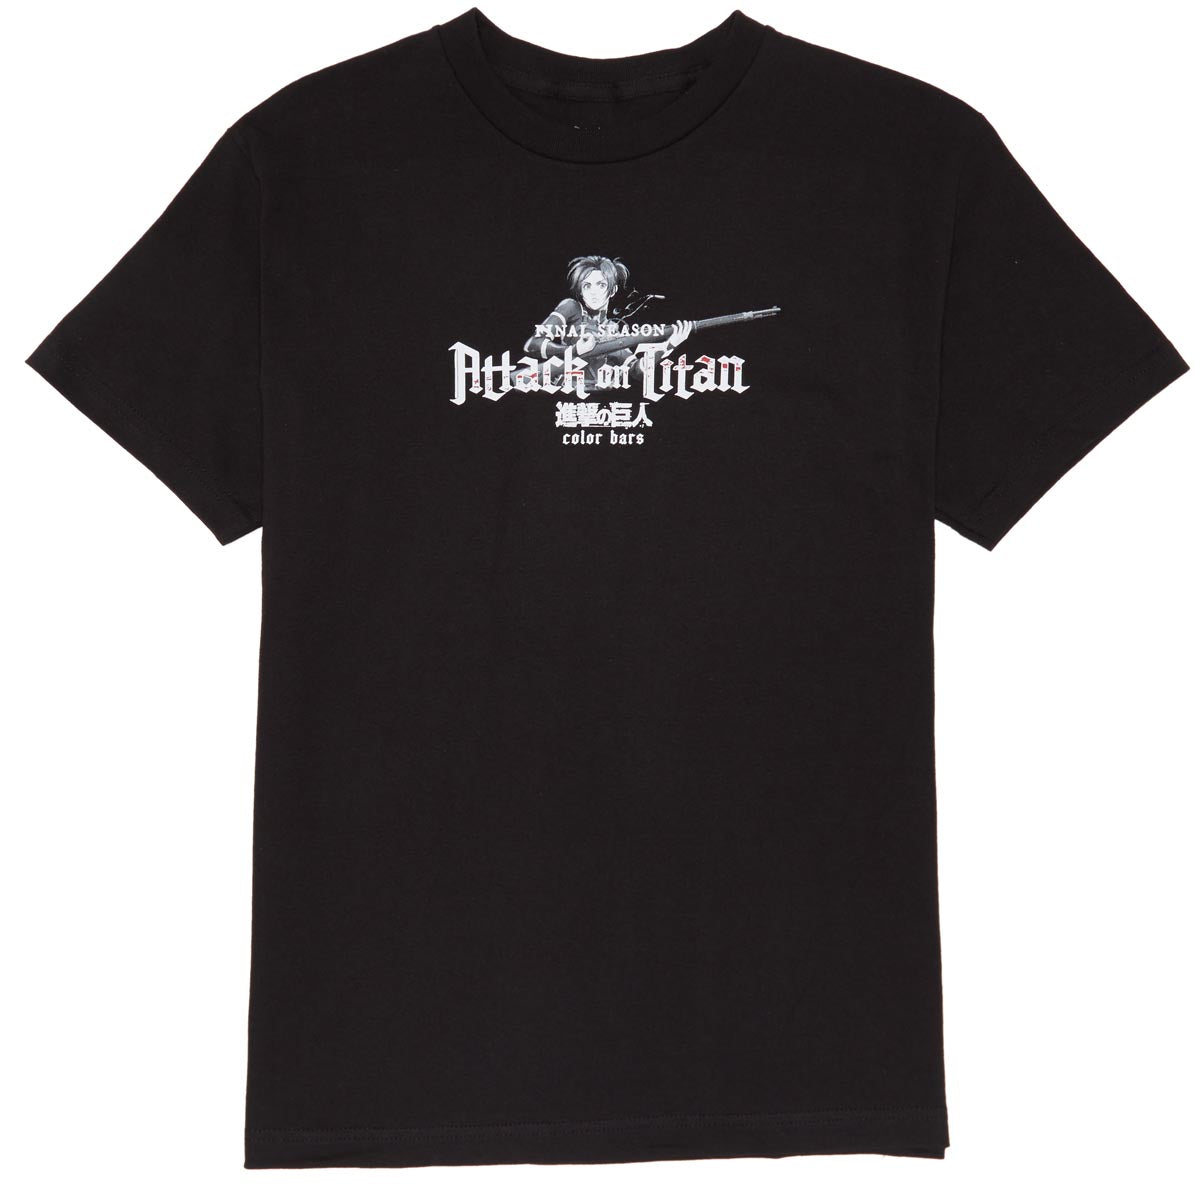 Color Bars x Attack on Titan Loaded T-Shirt - Black image 1